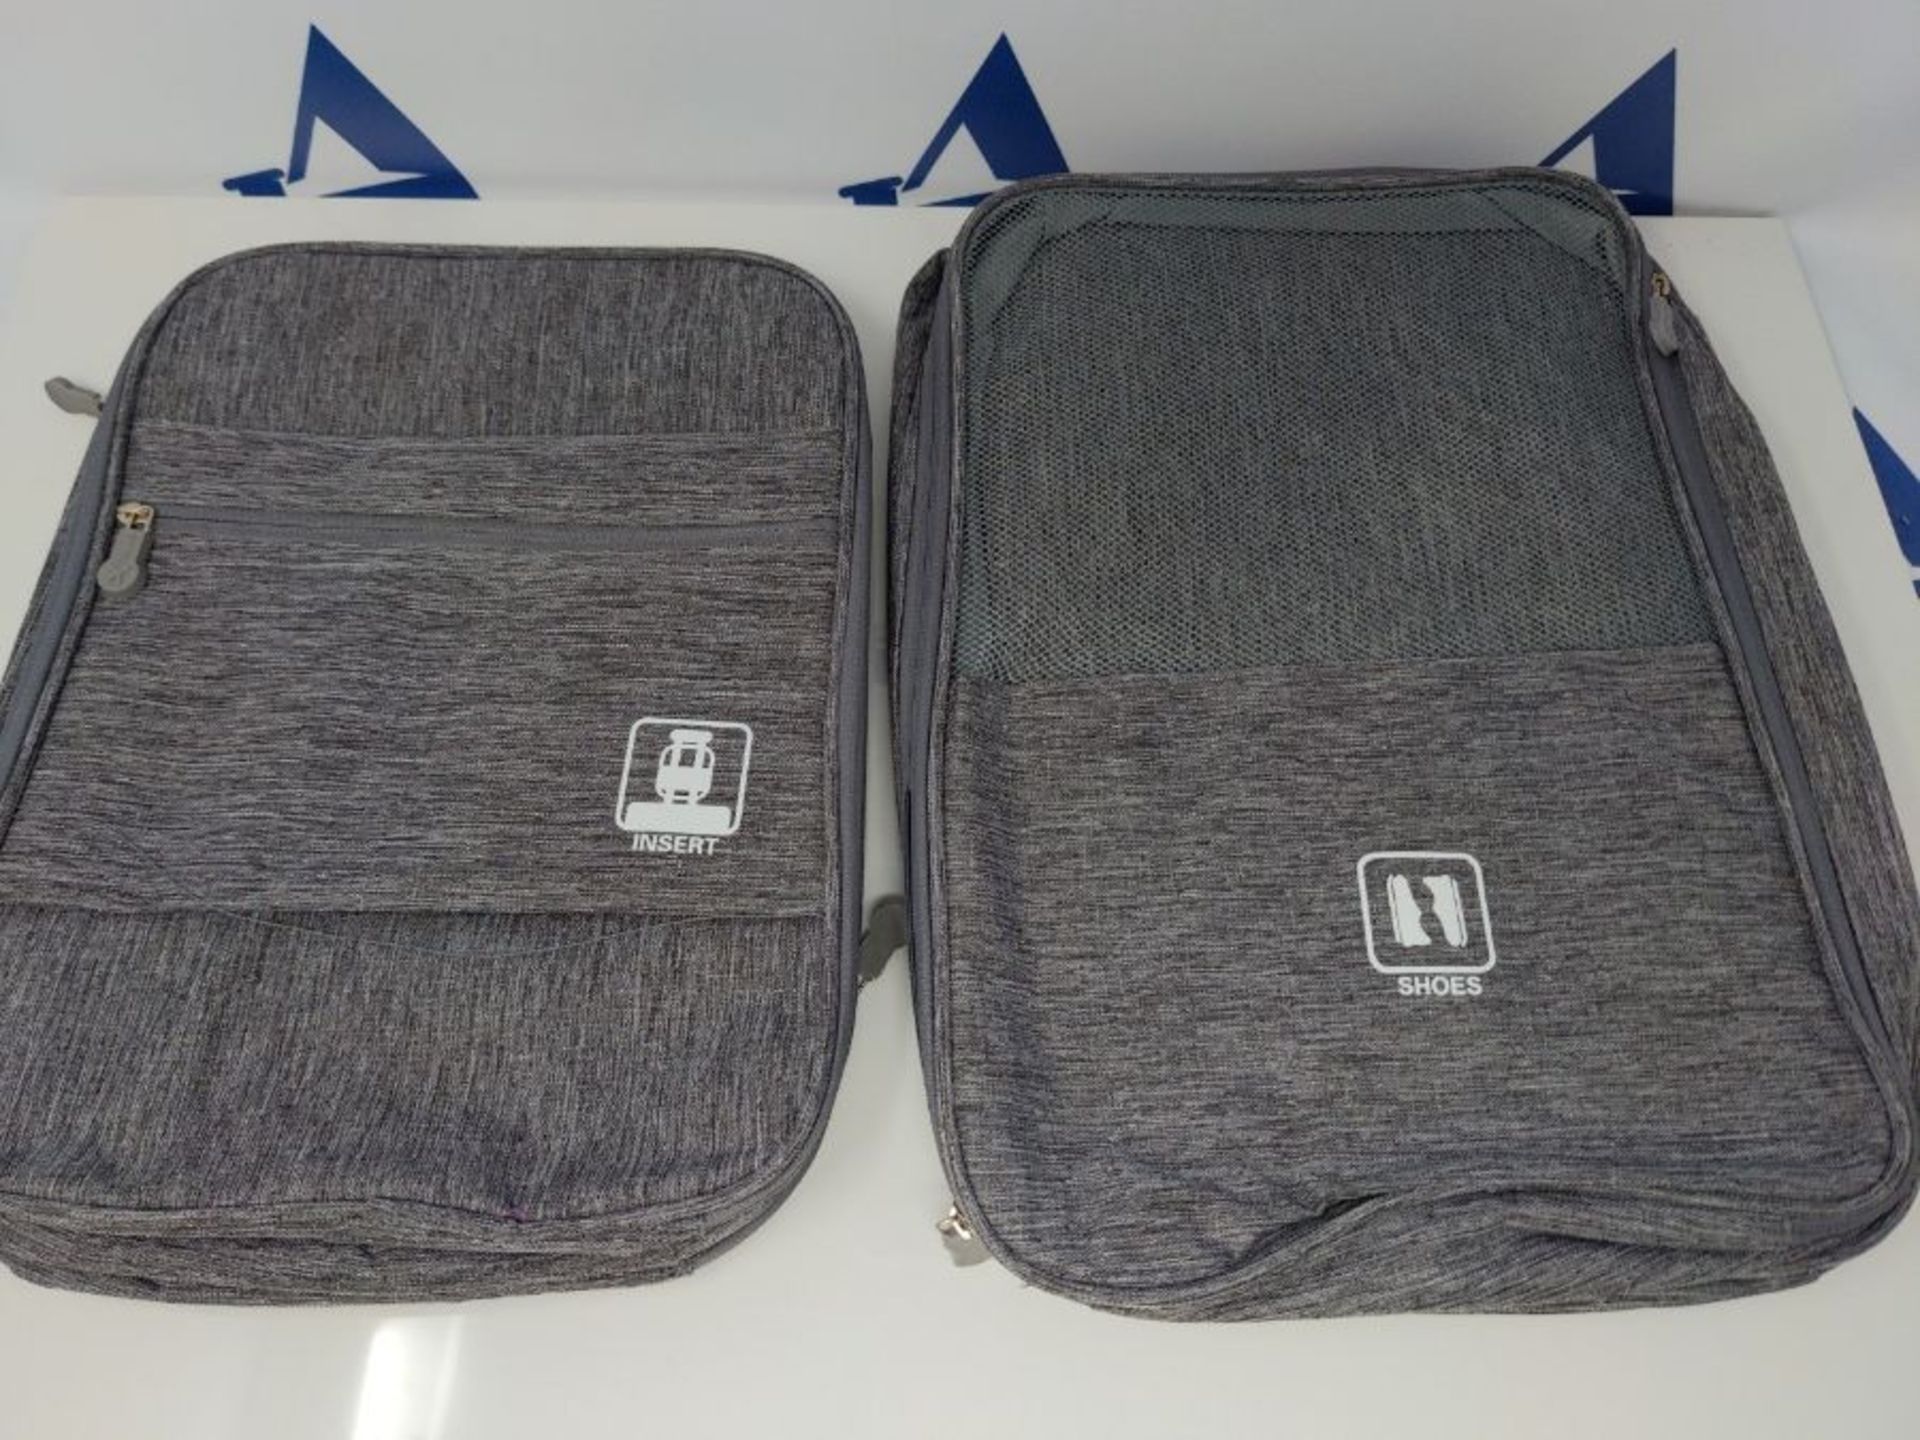 Shoe Bag Travel Pack of 3 Waterproof Dust-Resistant Shoes Bag Organiser Portable Trave - Image 2 of 2